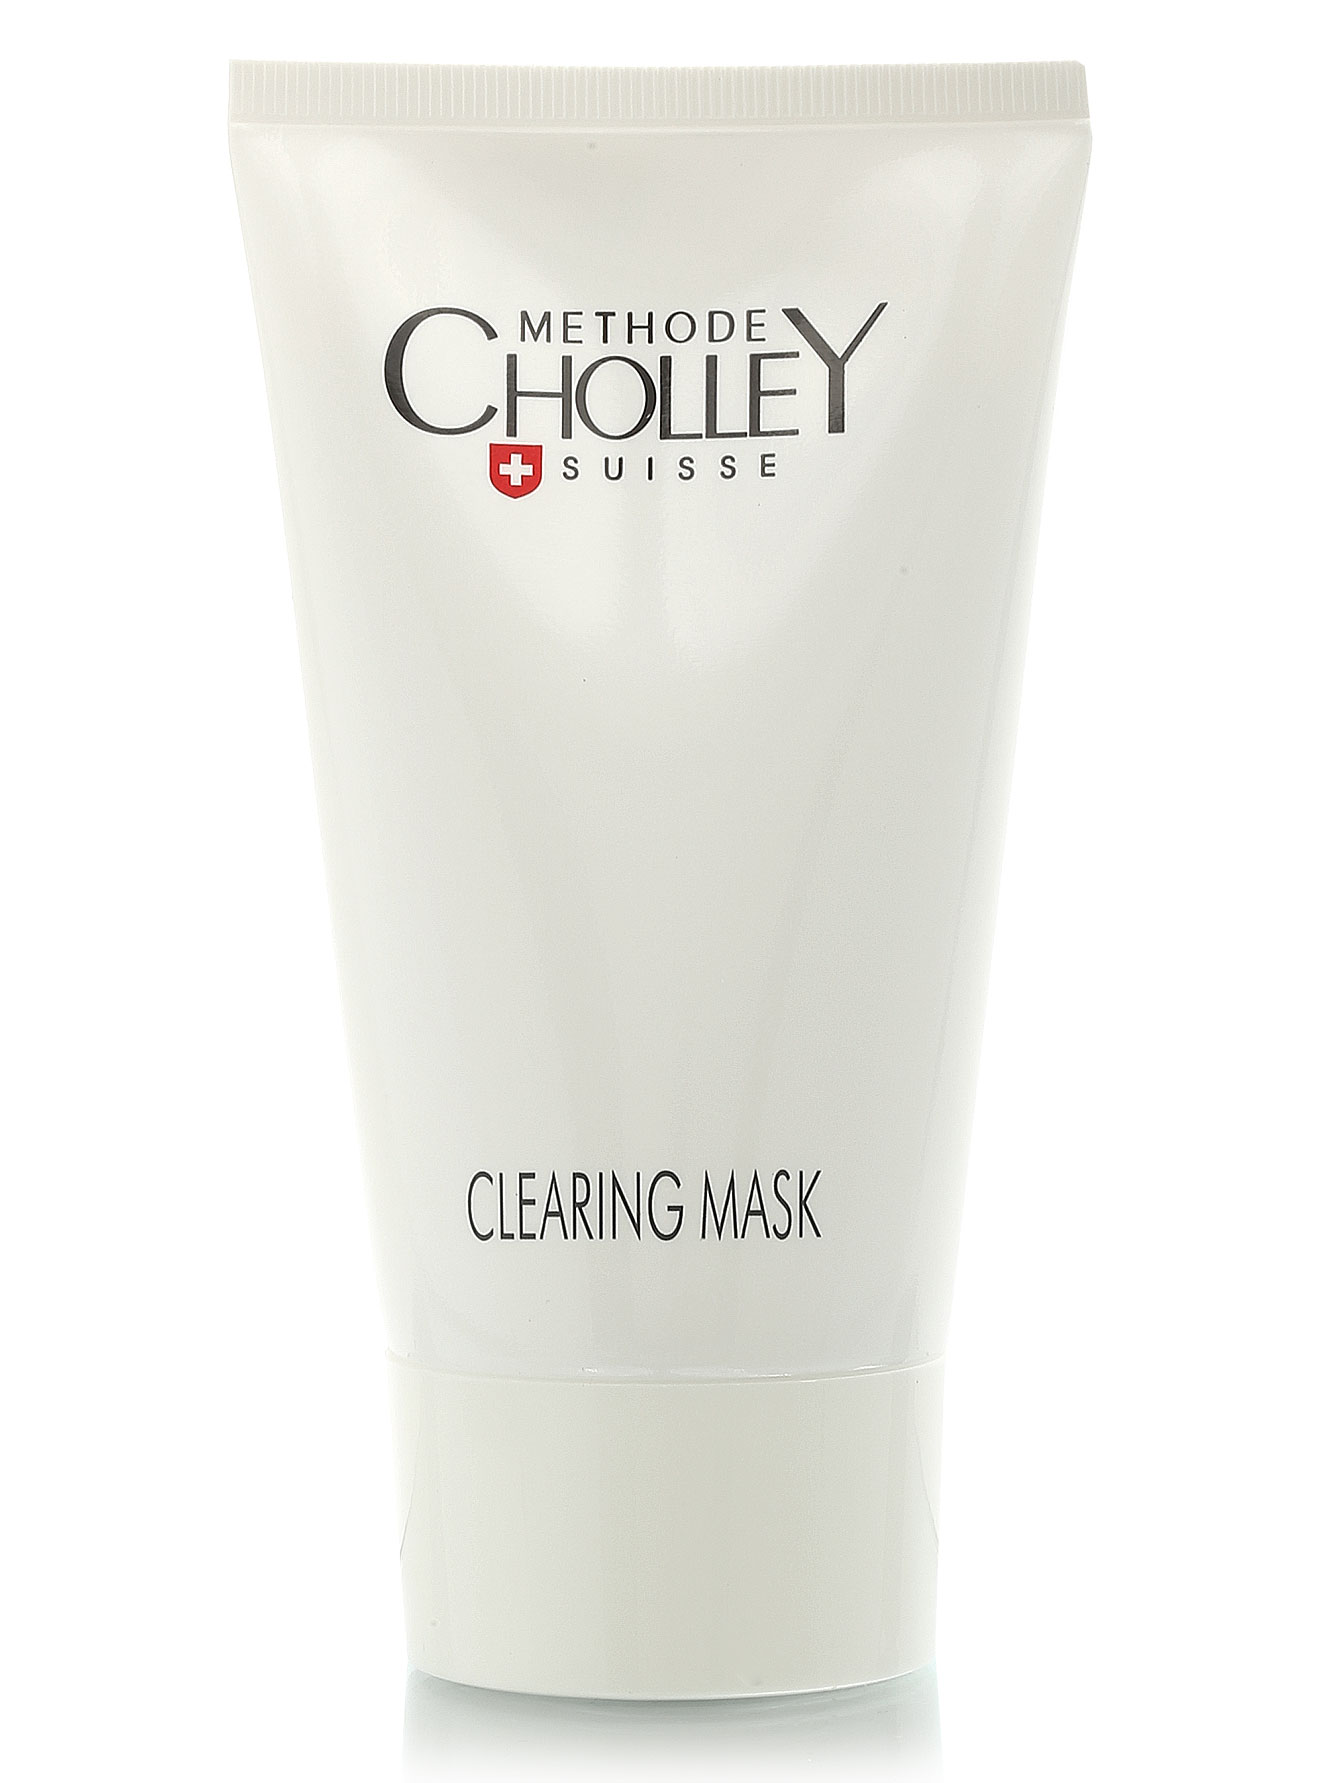  Отбеливающая маска Cholley - Skin Care, 150ml - Общий вид